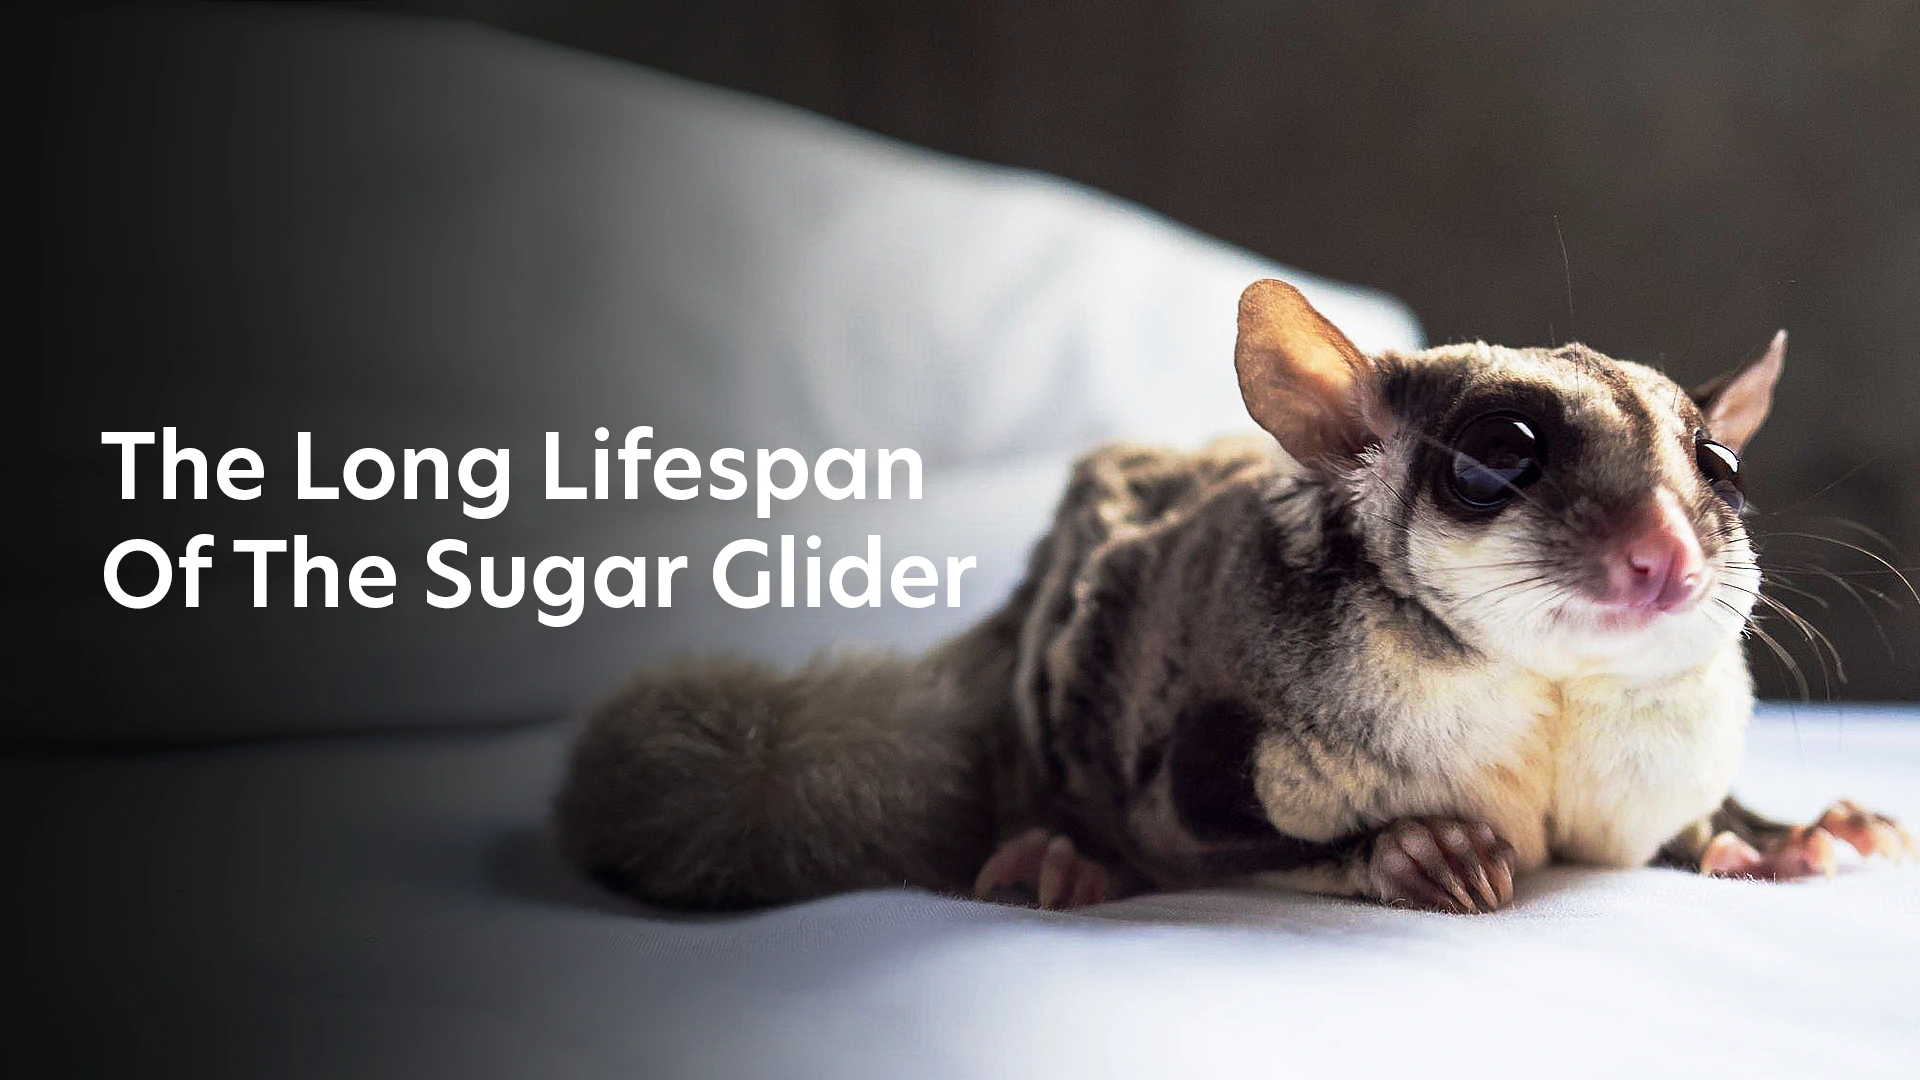 The Long Lifespan Of The Sugar Glider